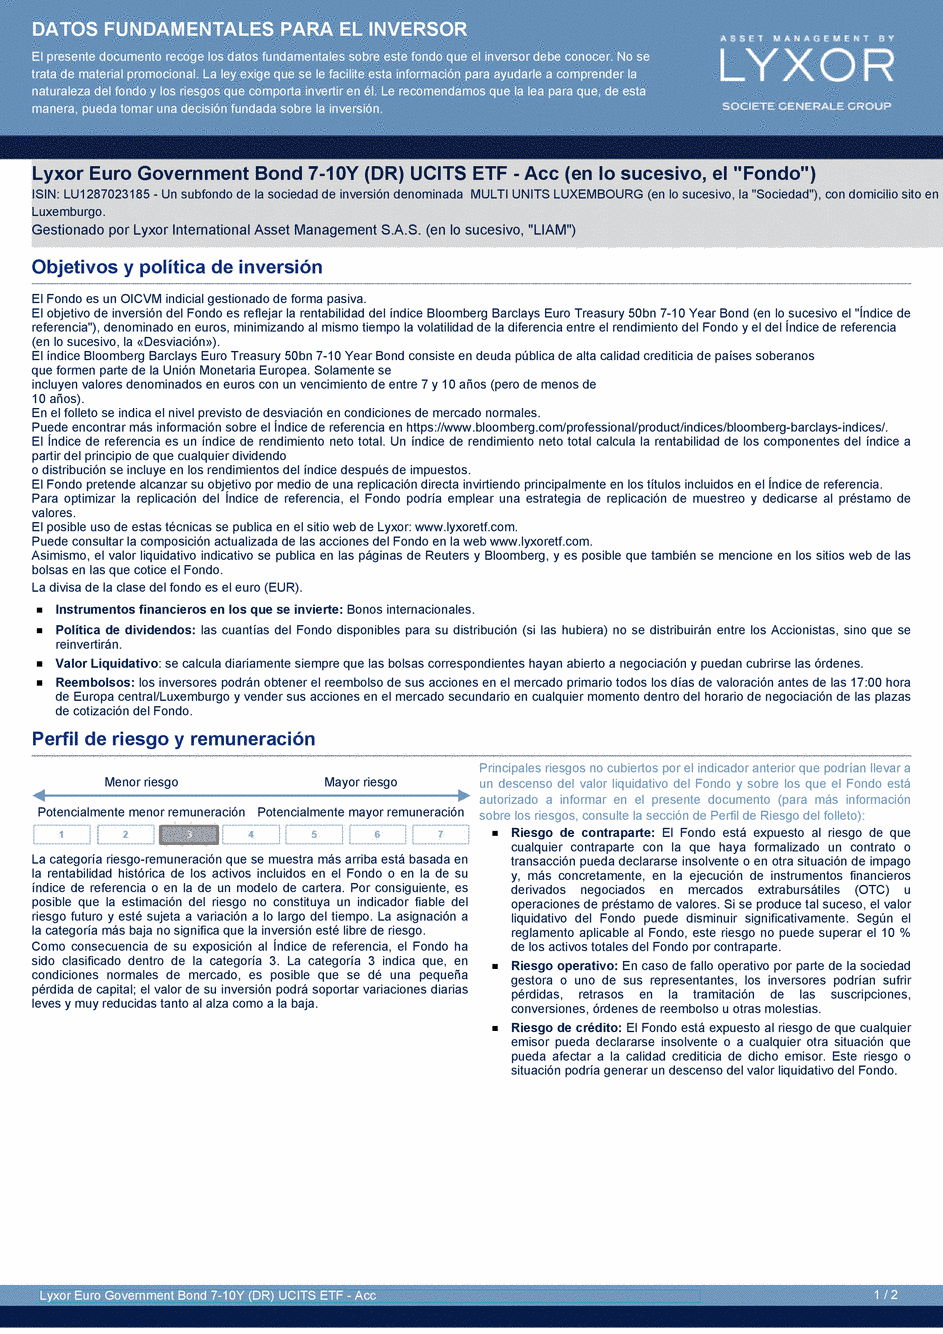 DICI Lyxor Euro Government Bond 7-10Y (DR) UCITS ETF - Acc - 19/02/2021 - Espagnol